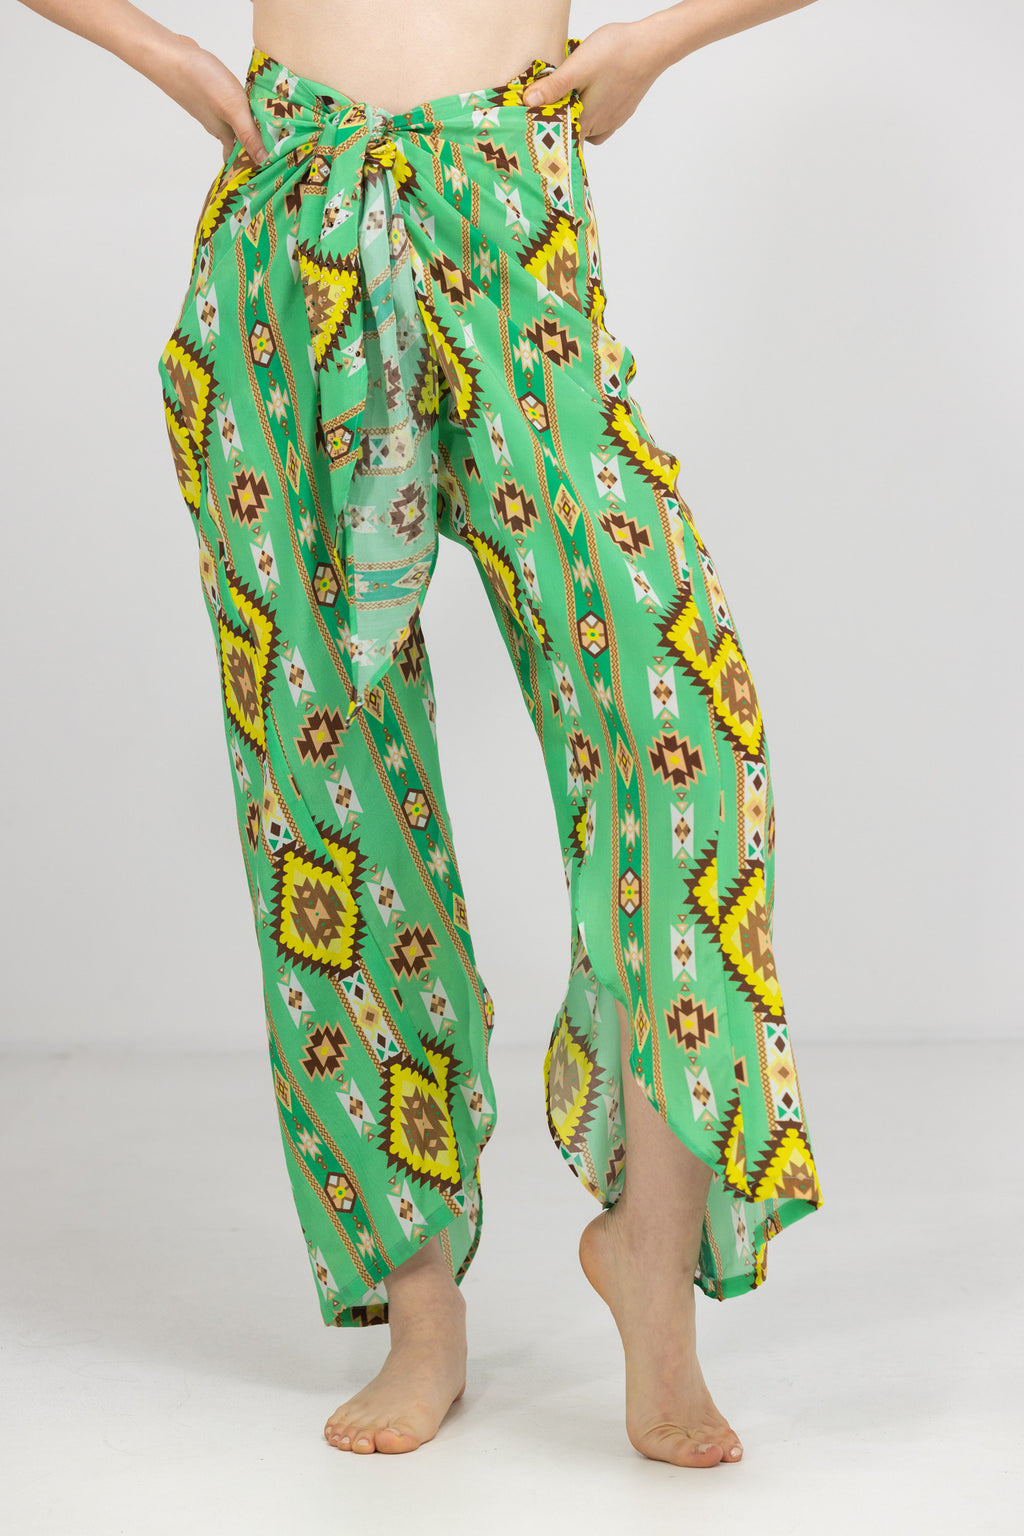 INOA Fashion Silk FISHERMAN PANTS Melbourne Print Green & Yellow - Sub Couture